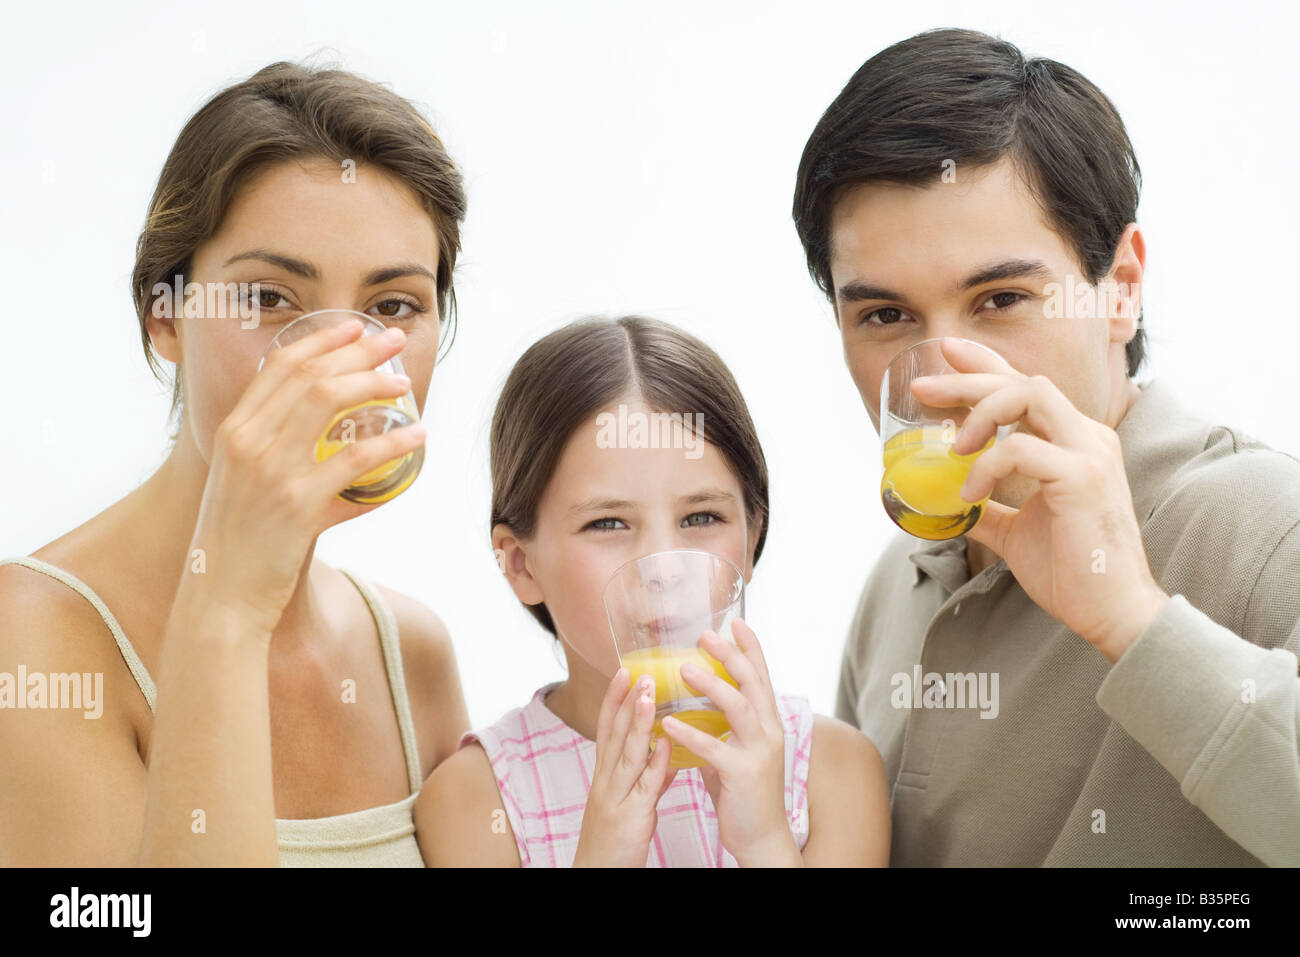 Family drinking orange juice, all looking at camera Stock Photo